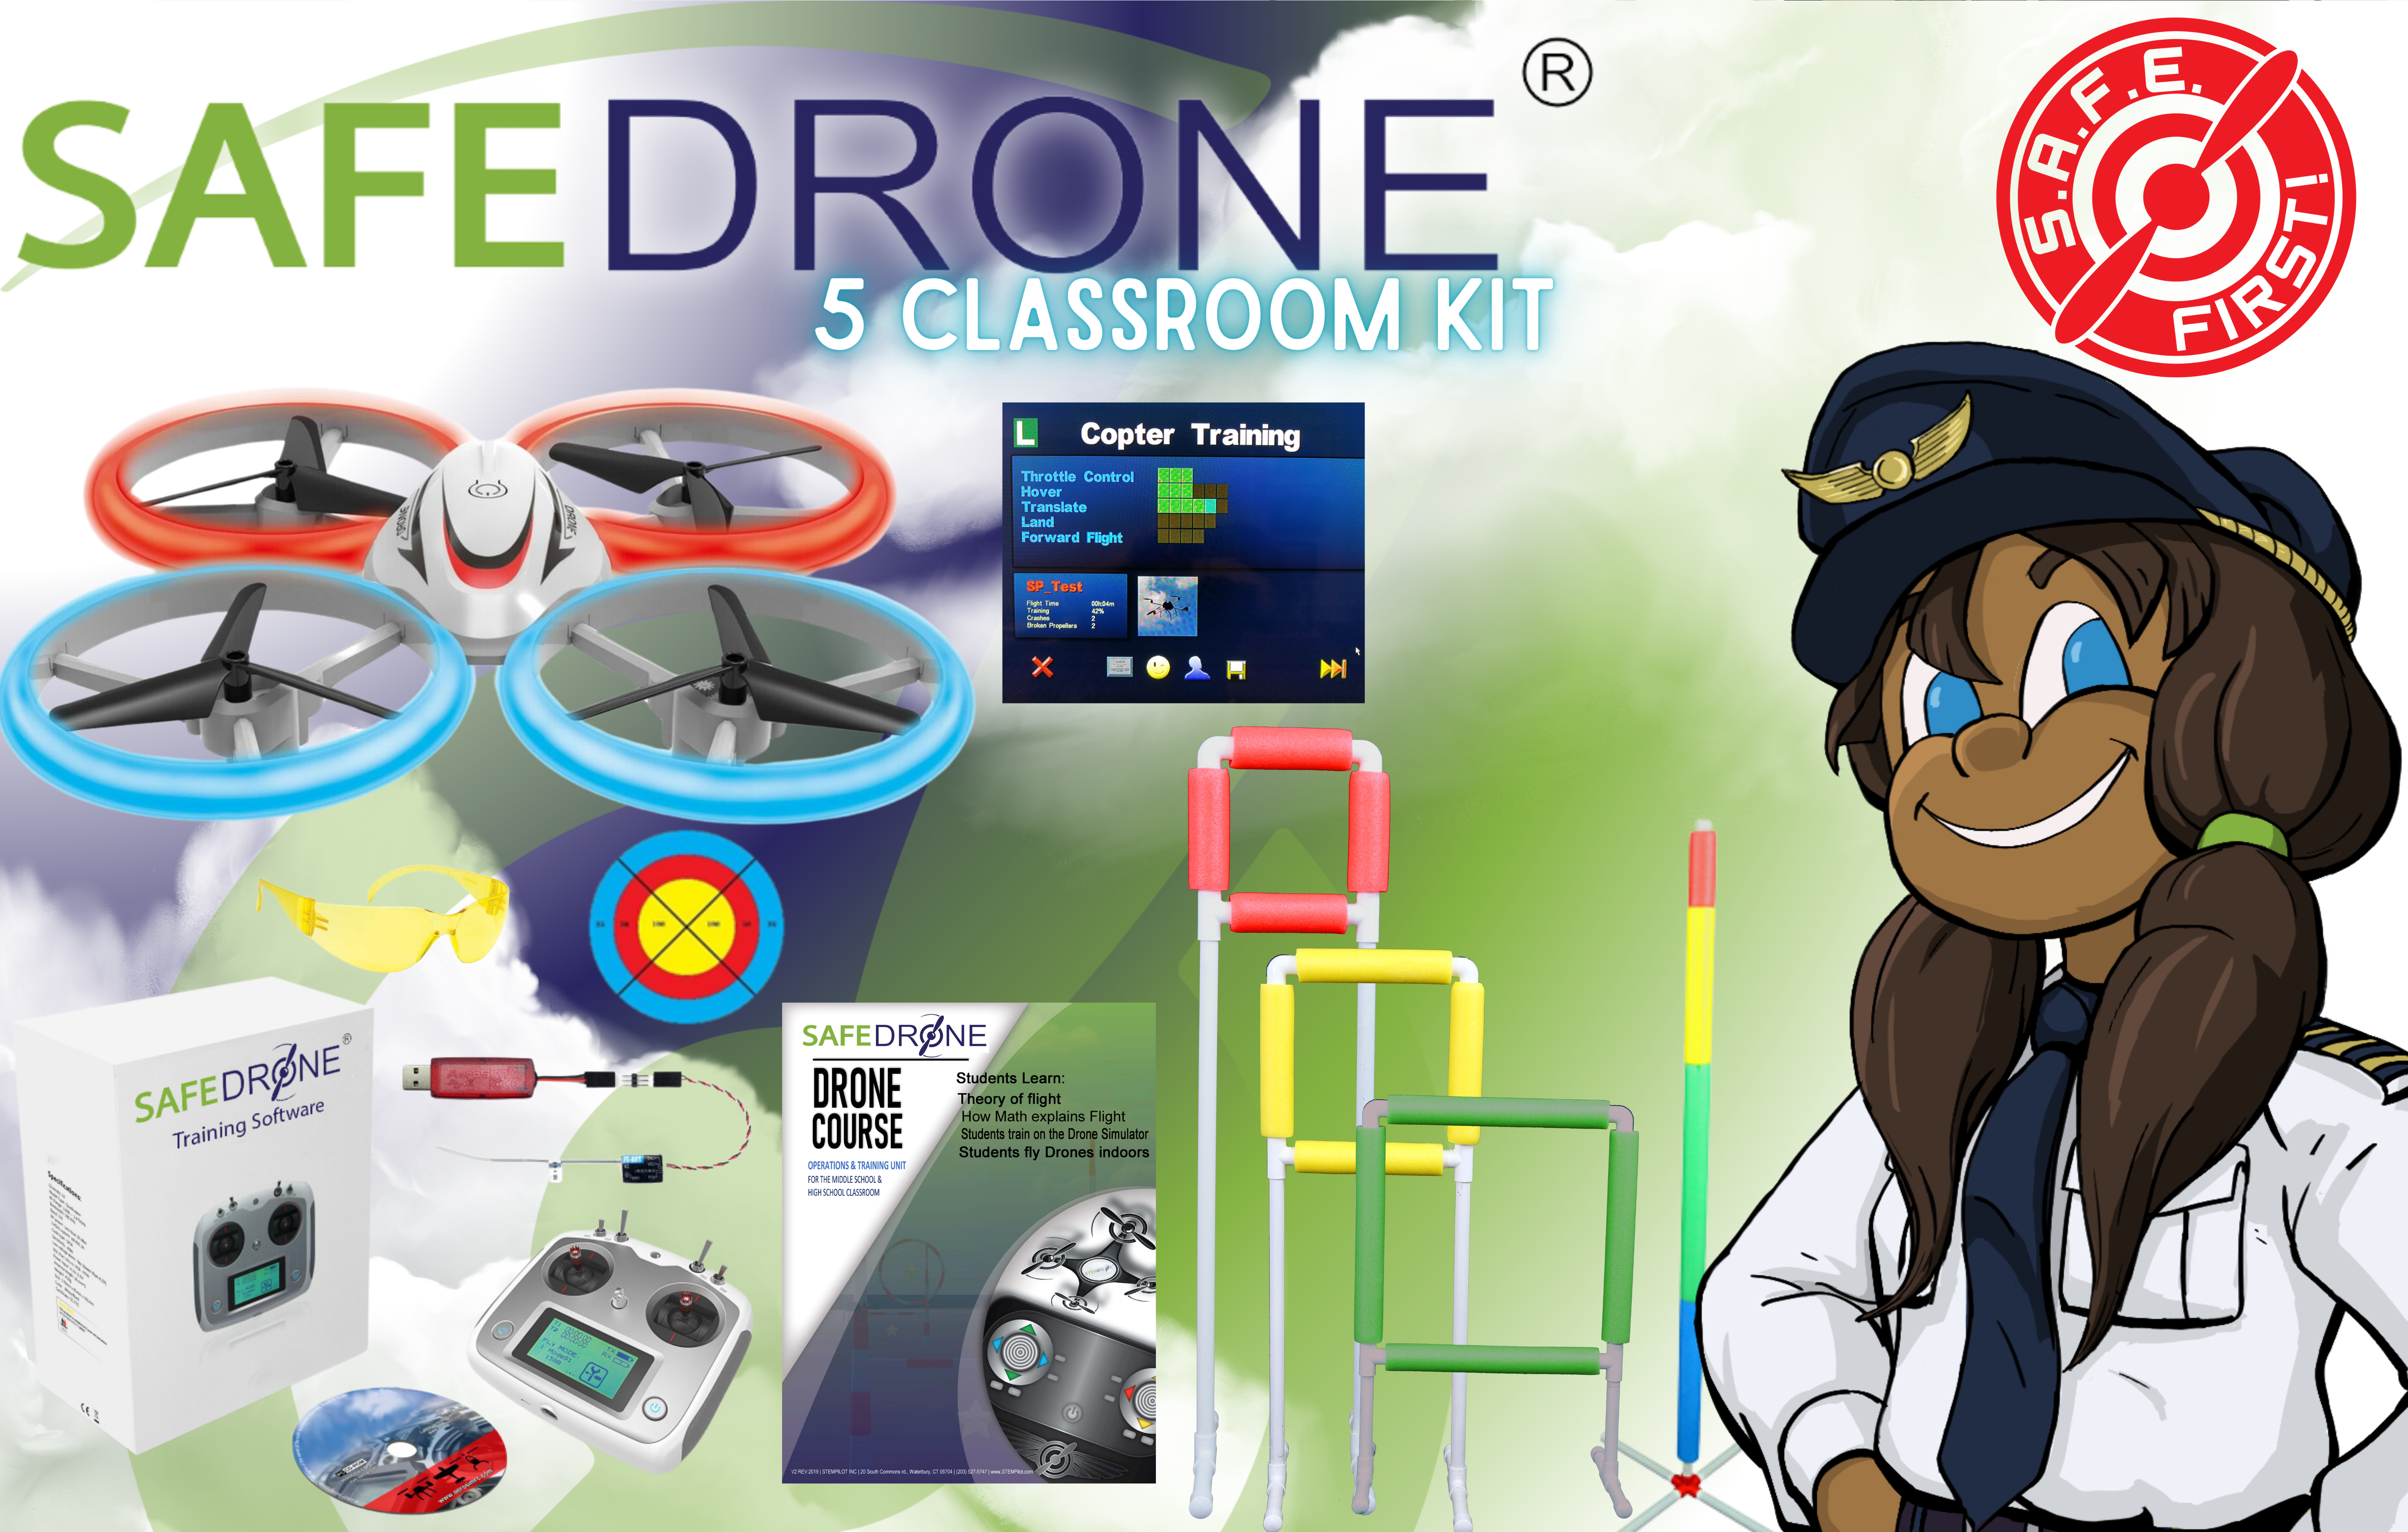 SAFEDrone Classroom 5 Kit Image